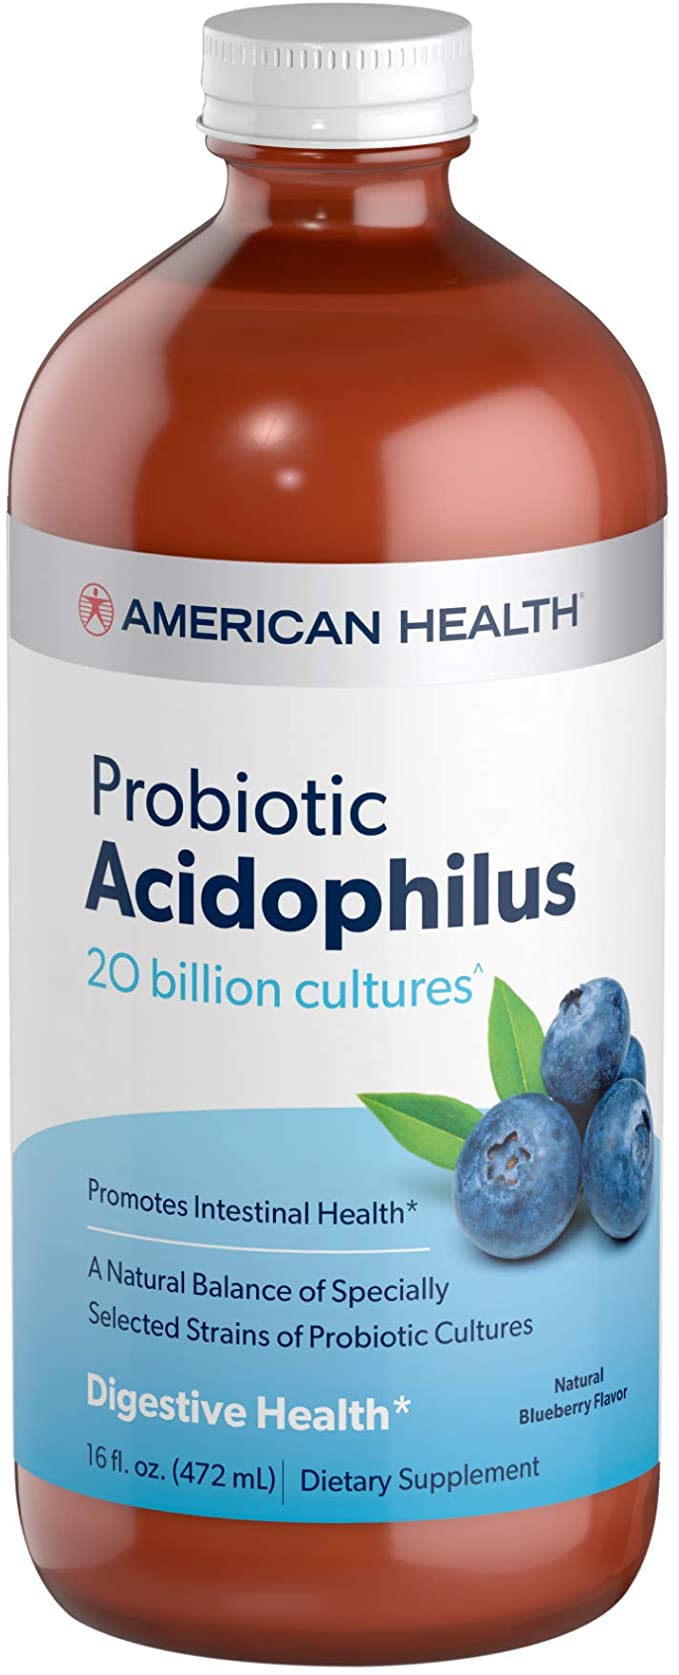 American Health Probiotic Acidophilus, Natural Blueberry Flavor - Promotes Intestinal Health, Encourages Nutrient Absorption & Immune Health - Gluten-Free, Vegetarian - 16 Fl Oz, 15 Total Servings